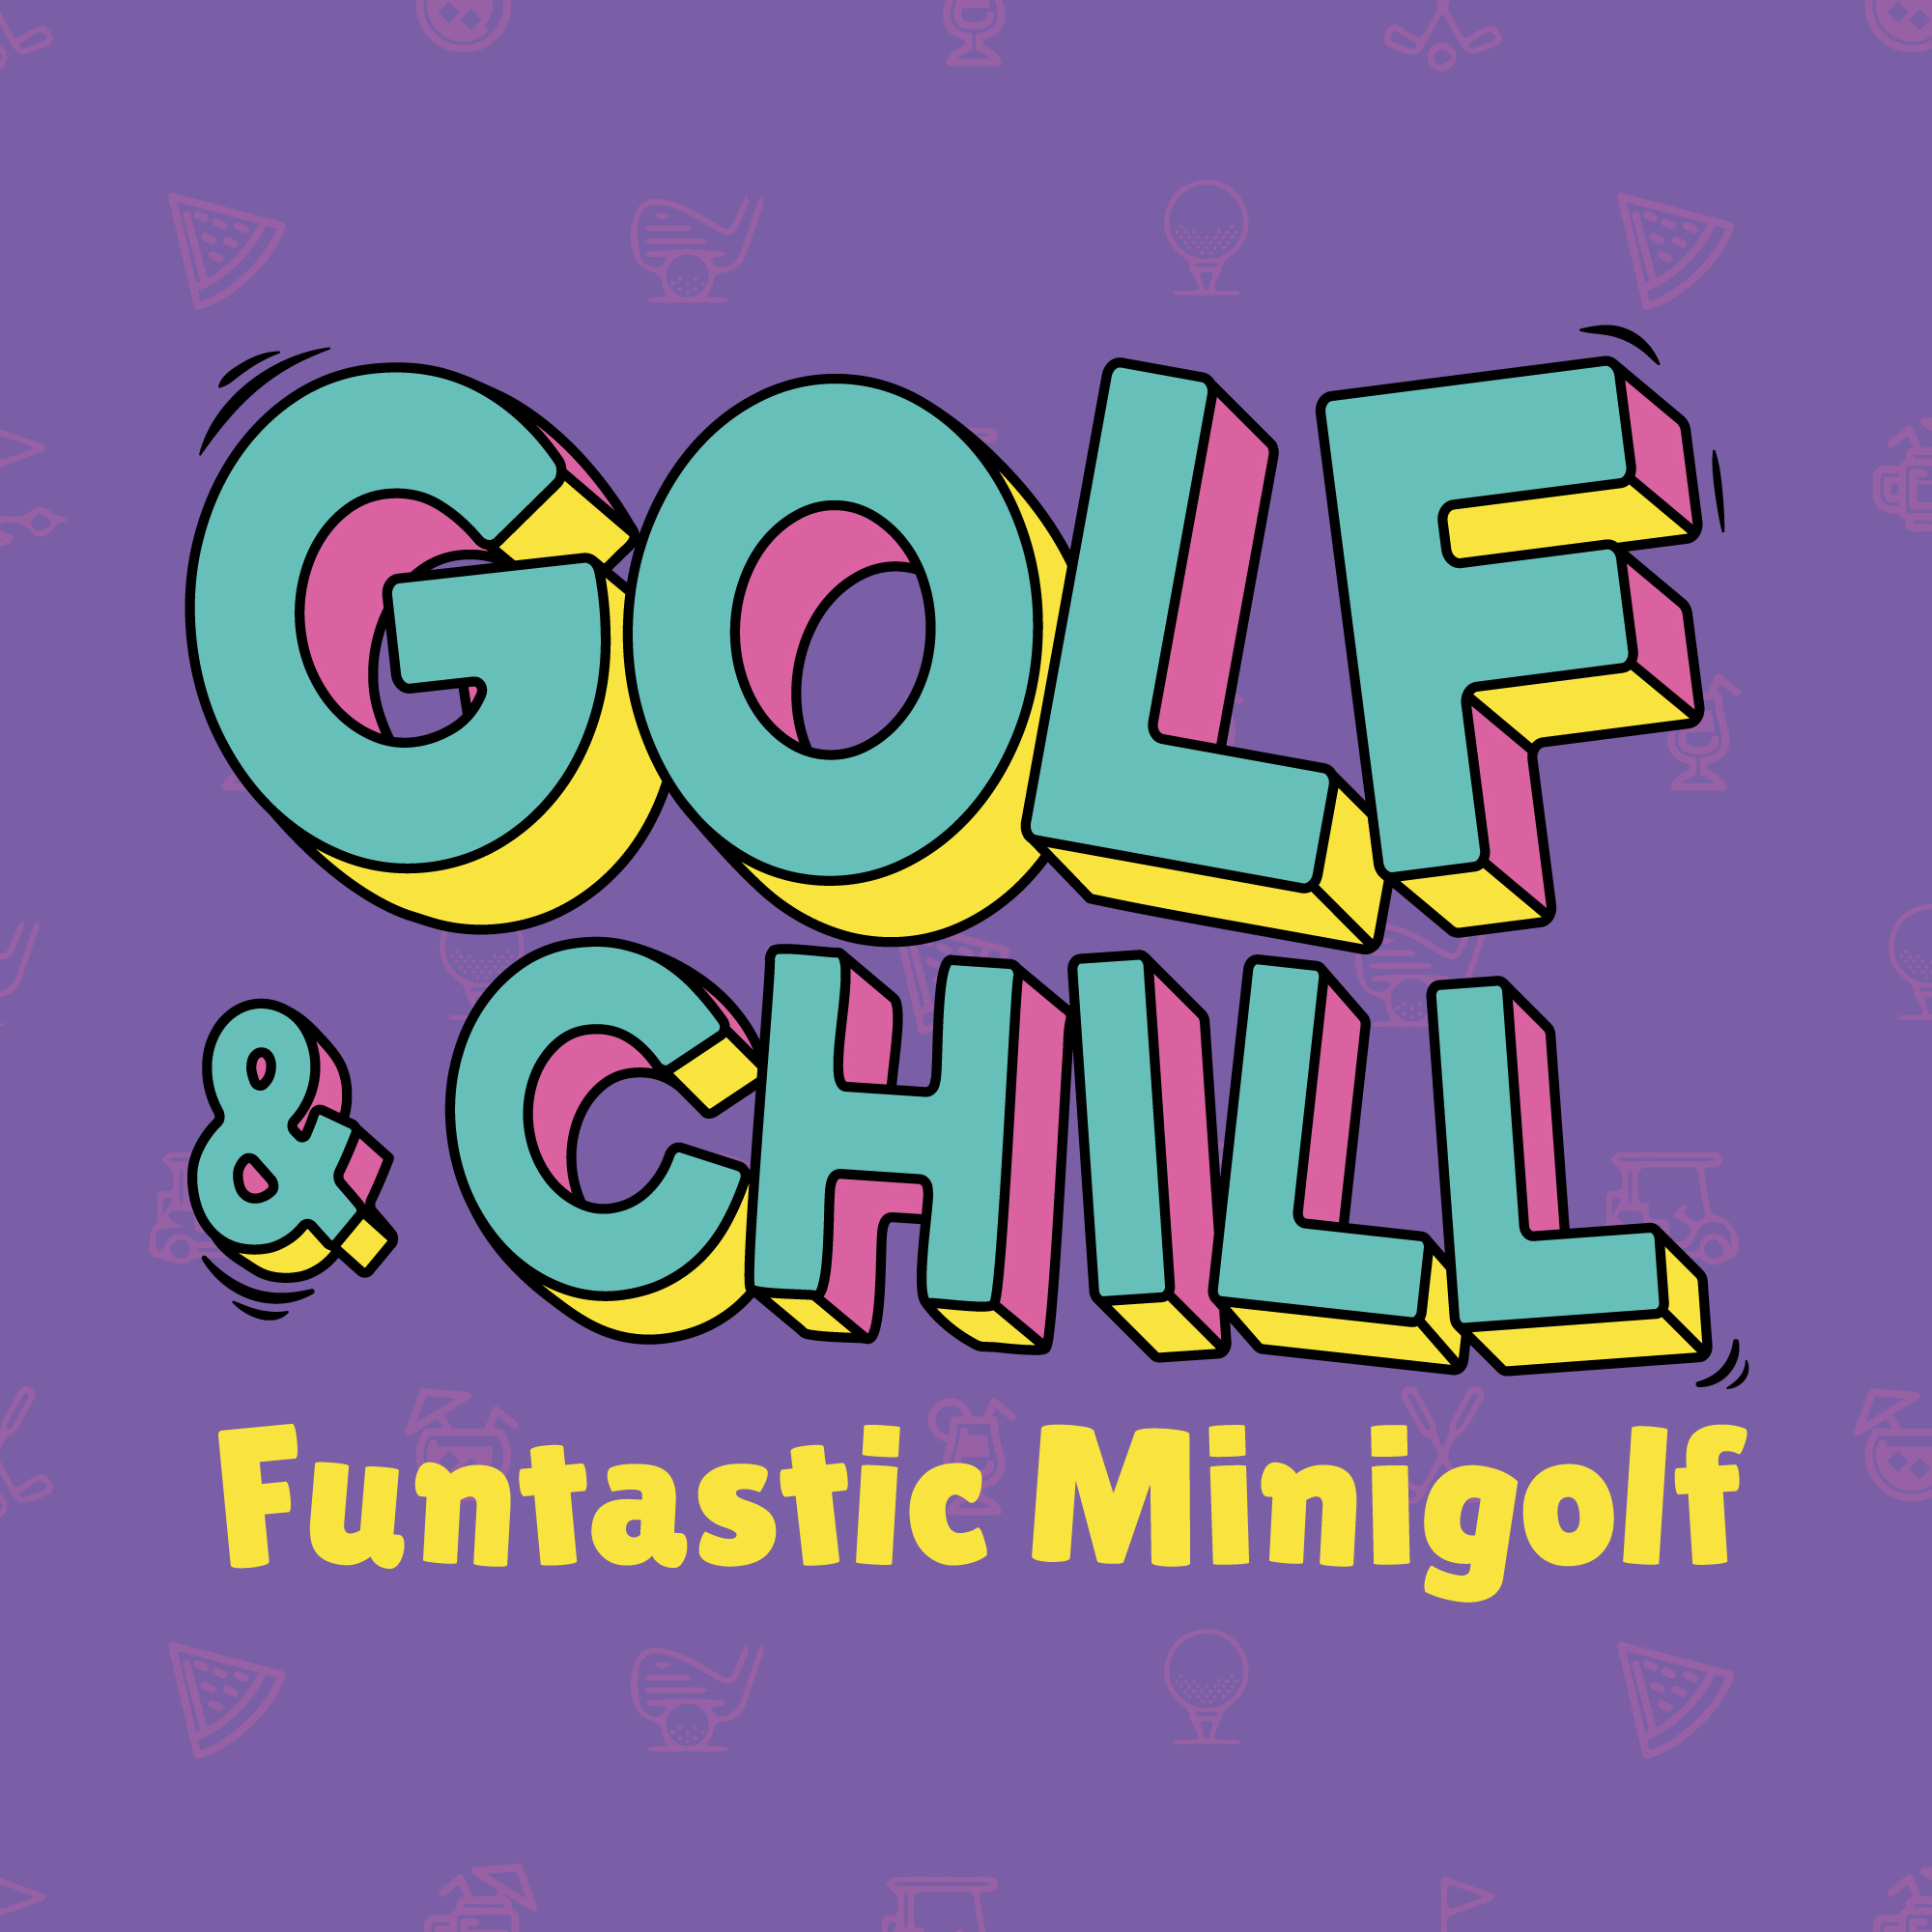 Création de Logo, Lille, Graphiste Lille, Logo Golf & Chill